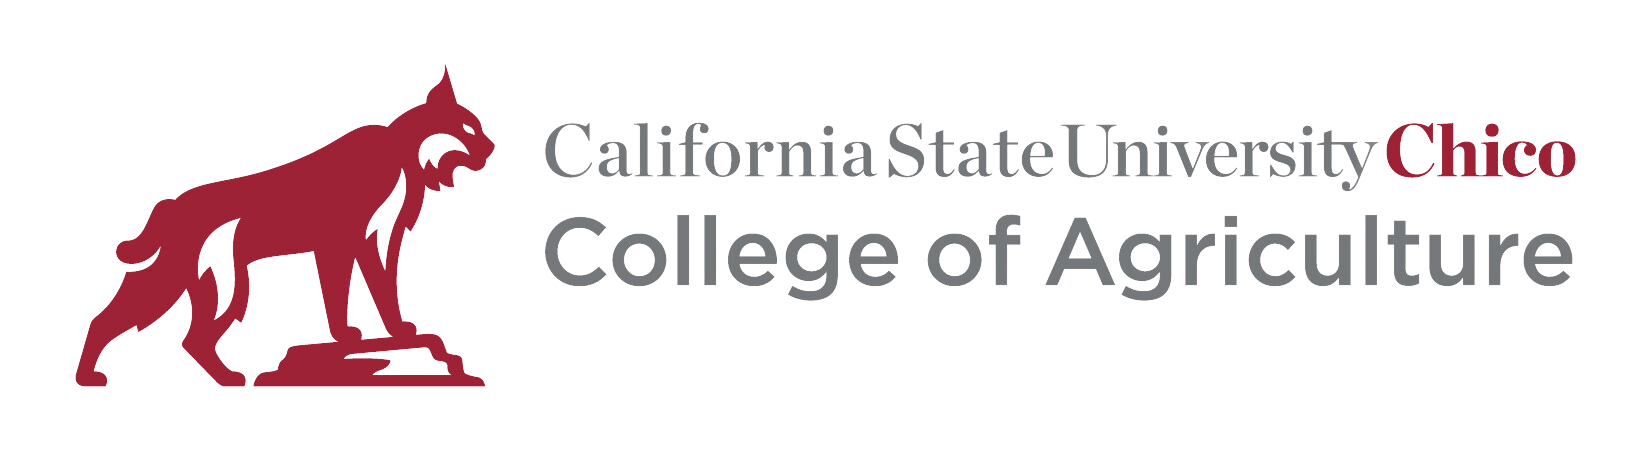 University of Chico logo